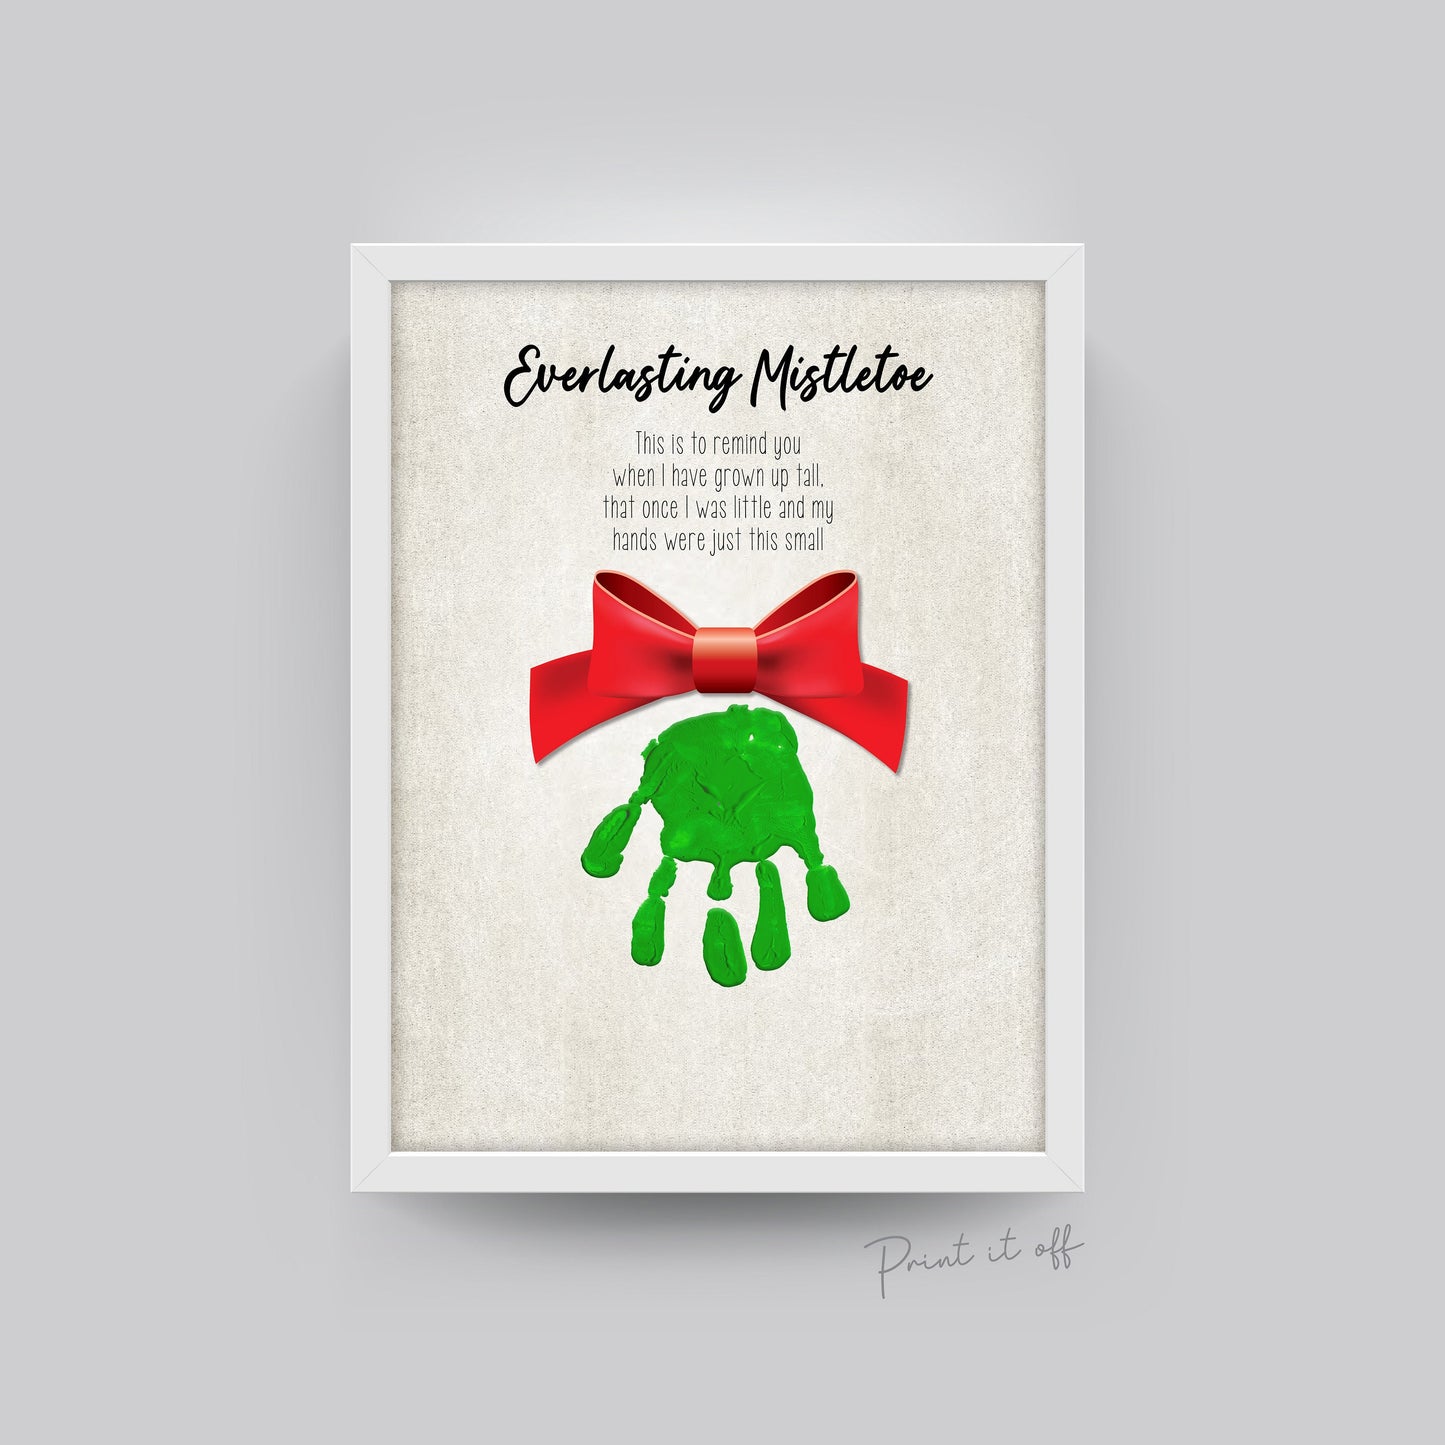 Everlasting Mistletoe Handprint / Baby Toddler Kids Art Craft / First Christmas Xmas / Printable Print Card /  Keepsake Memory 0104